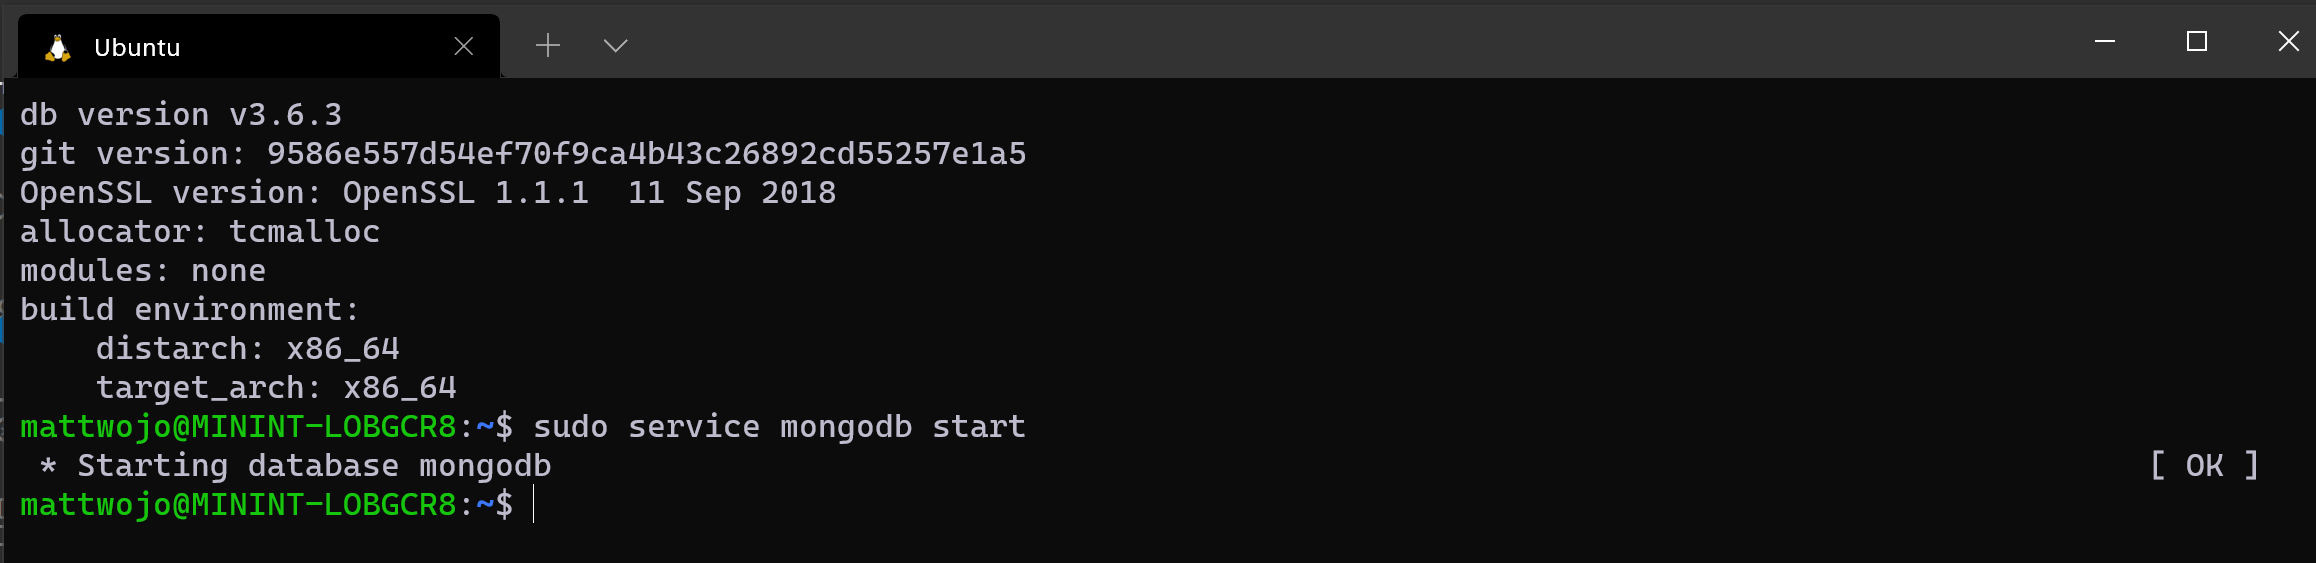 Executando o MongoDB no Ubuntu via WSL